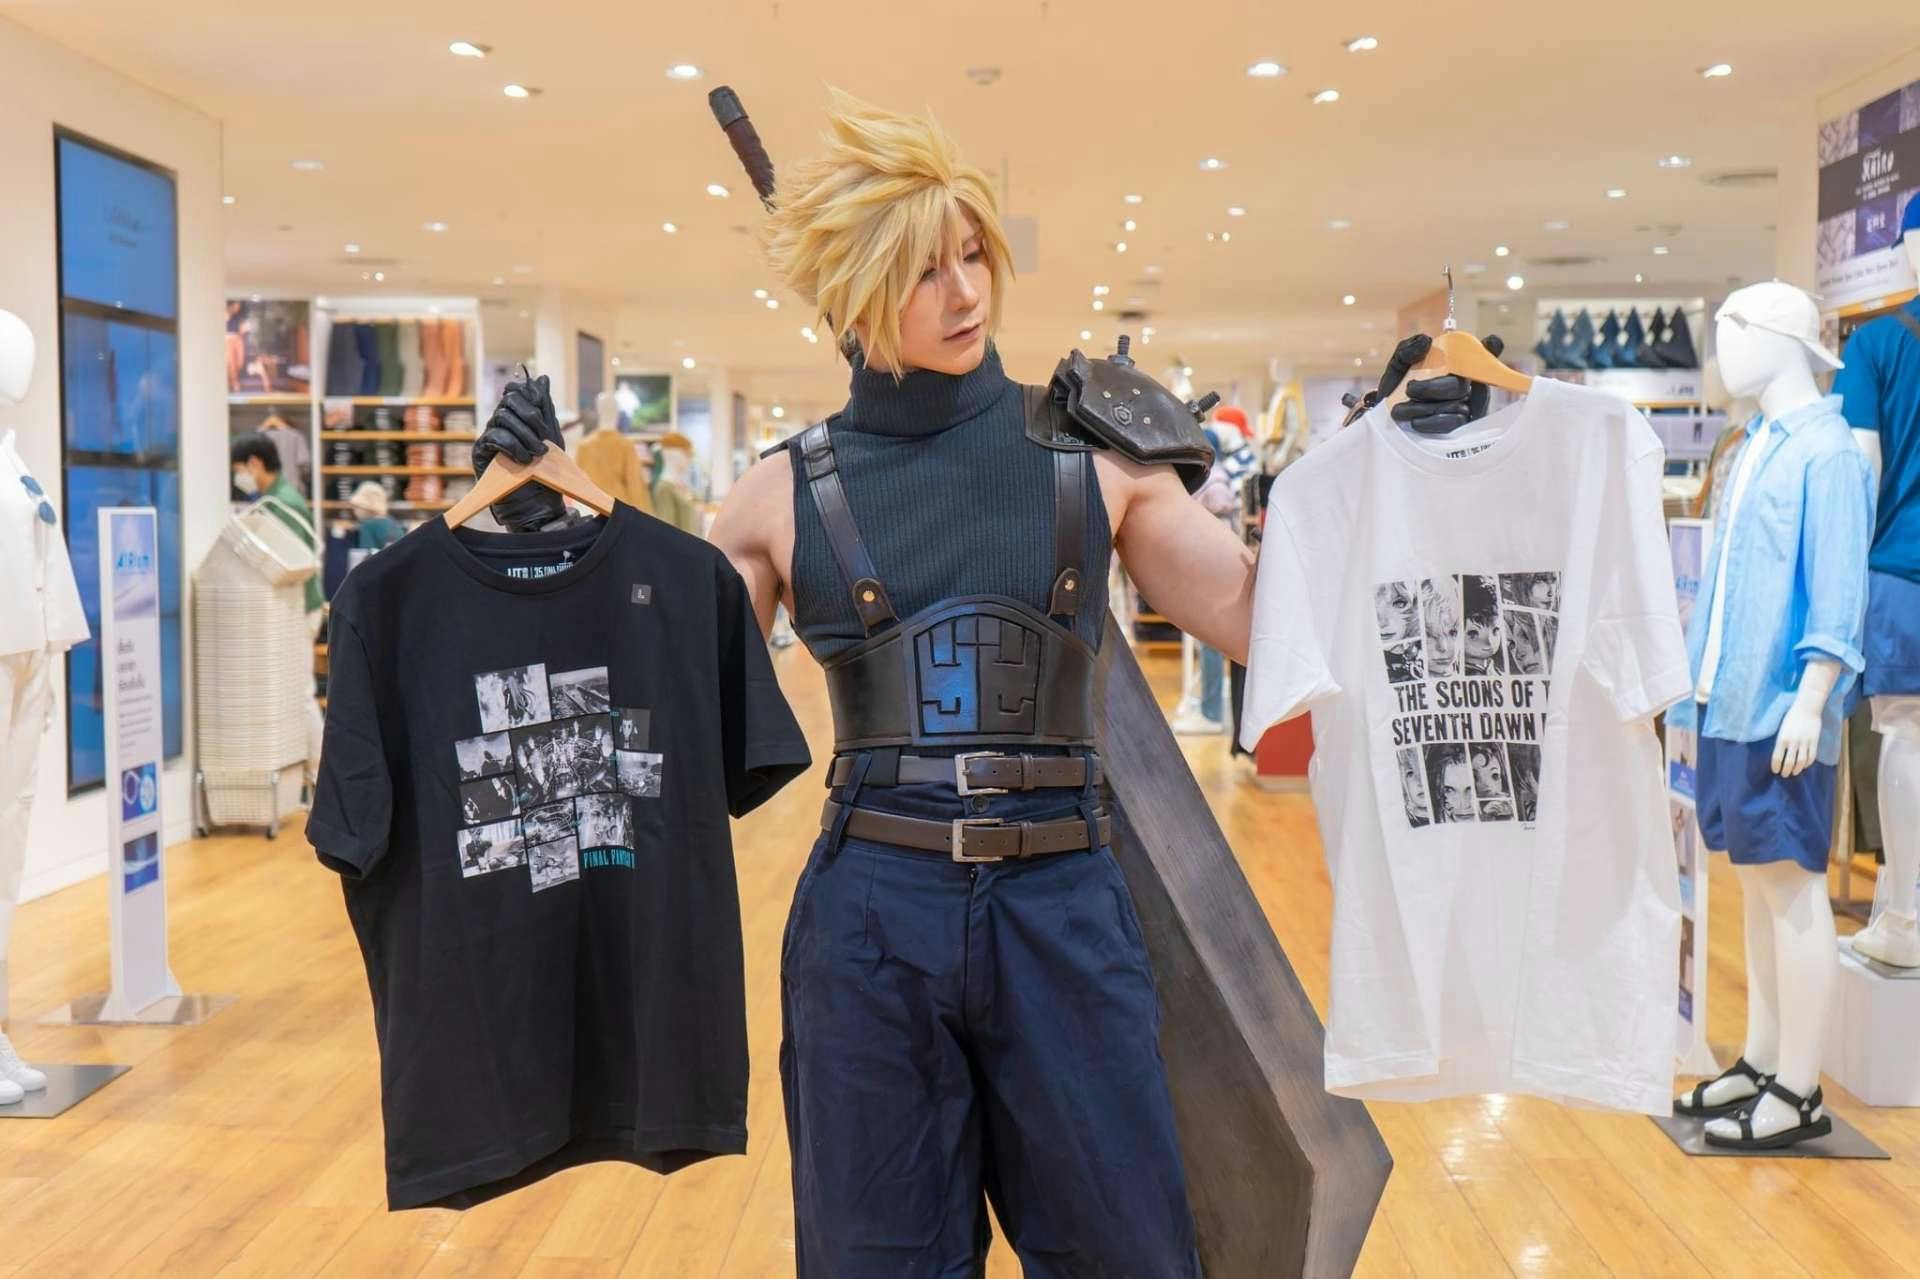 Cloud - Final Fantasy VIII - the best cosplay